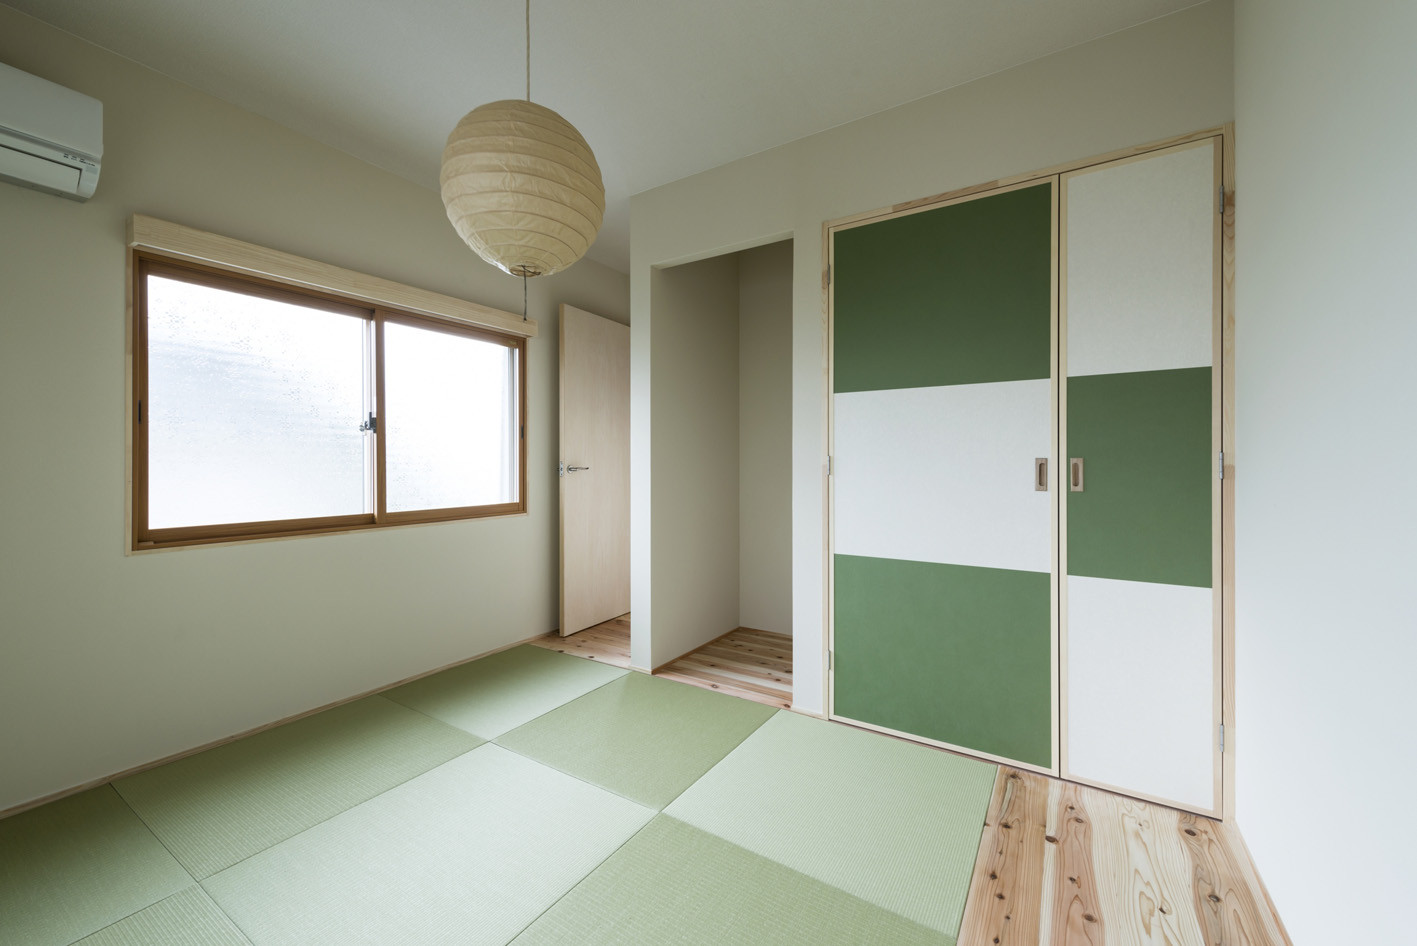 House Renovation in Osaka  Coil Kazuteru Matumura Architects-44